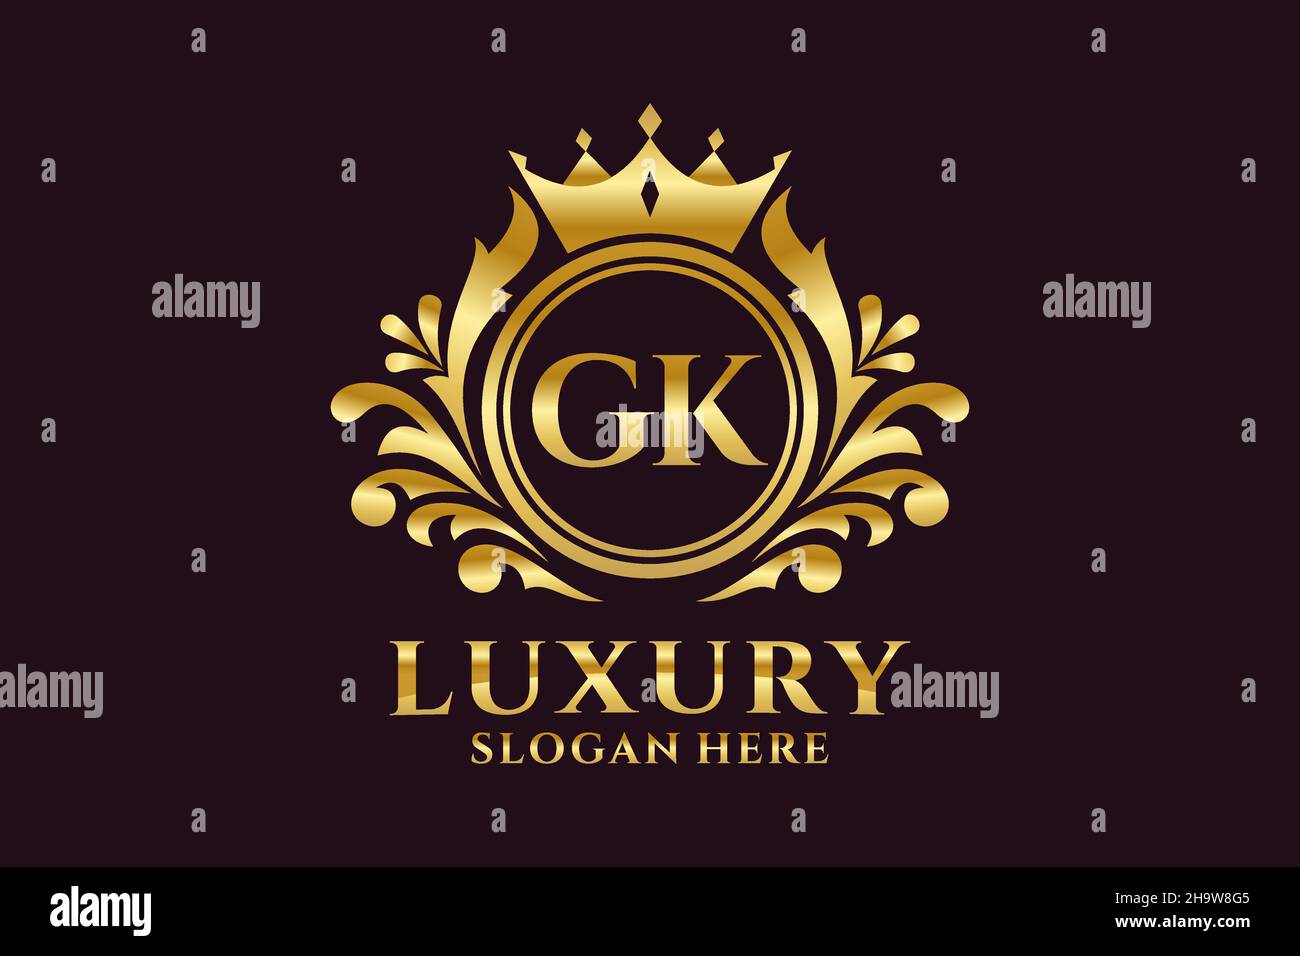 GK Letter Royal Luxury Logo-Vorlage in Vektorgrafik für luxuriöse Branding-Projekte und andere Vektorgrafik. Stock Vektor